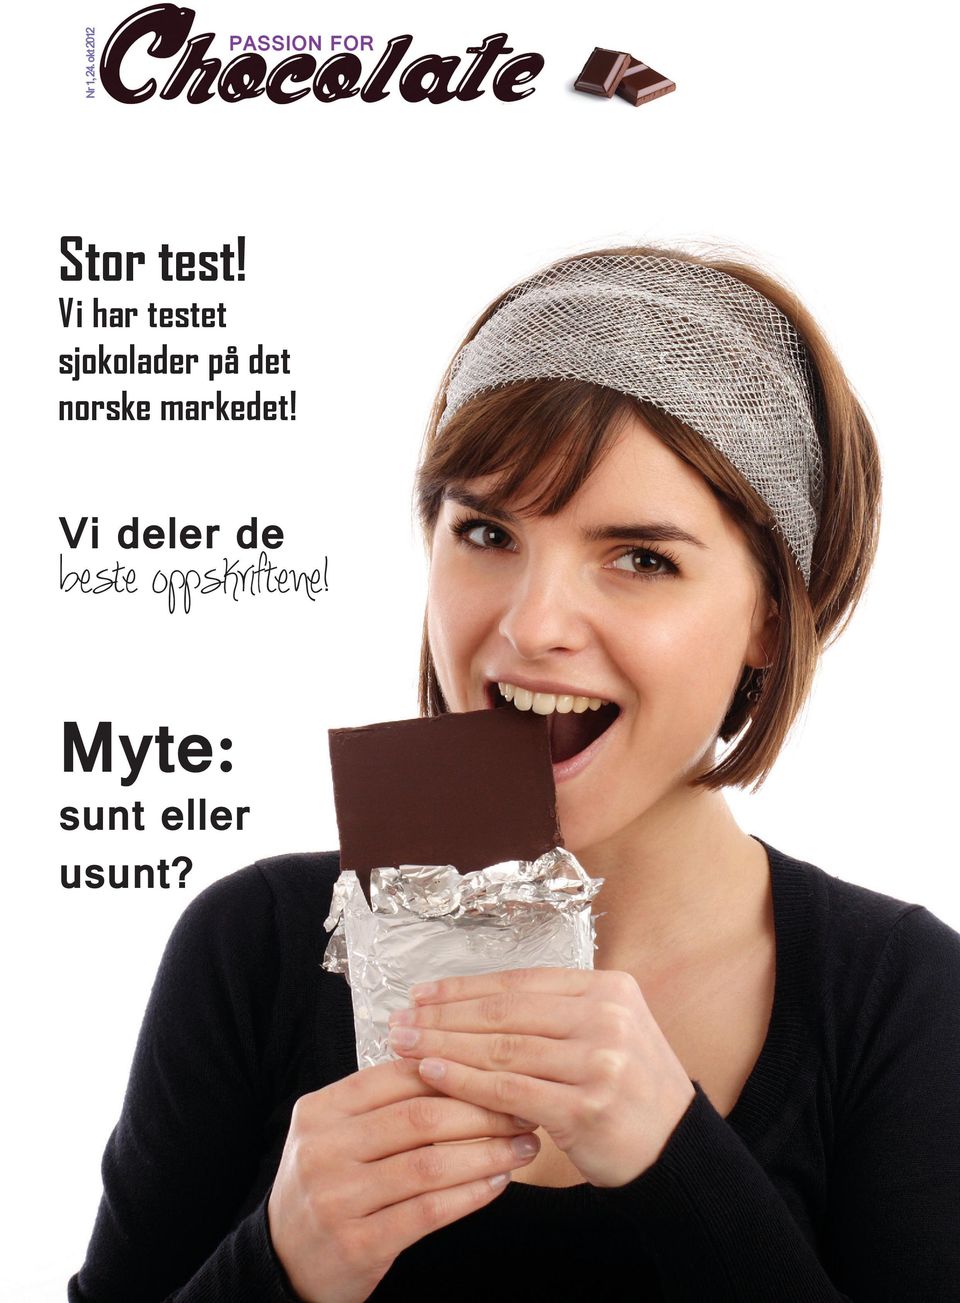 Vi har testet sjokolader på det norske